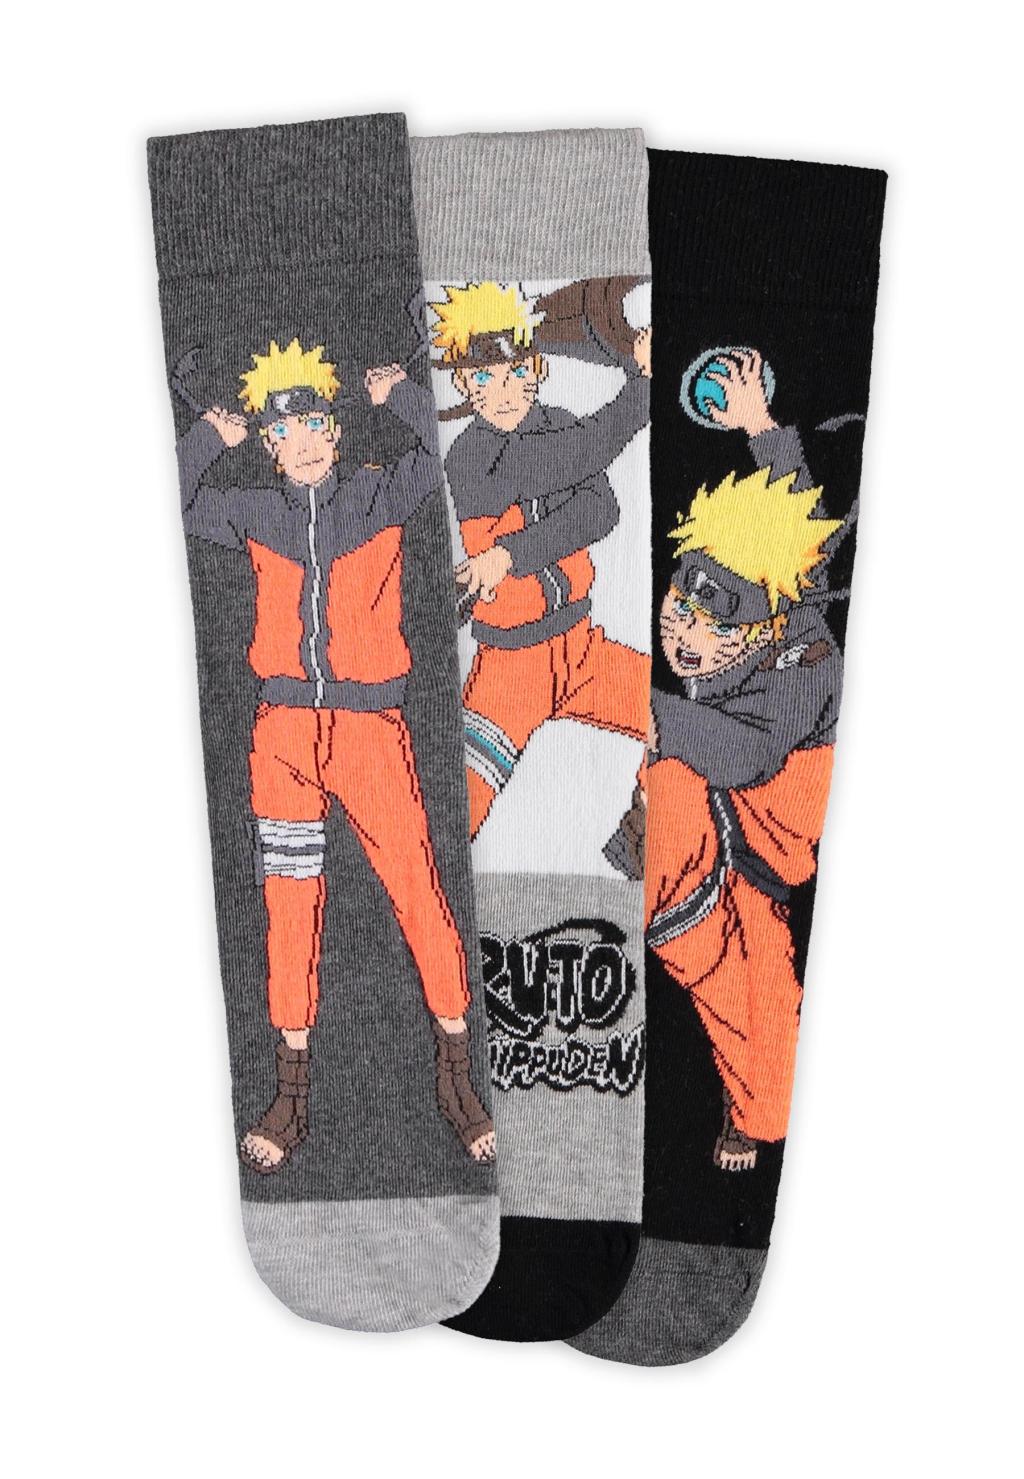 NARUTO SHIPPUDEN - Naruto - Pack of 3 pairs of socks (T43-46)